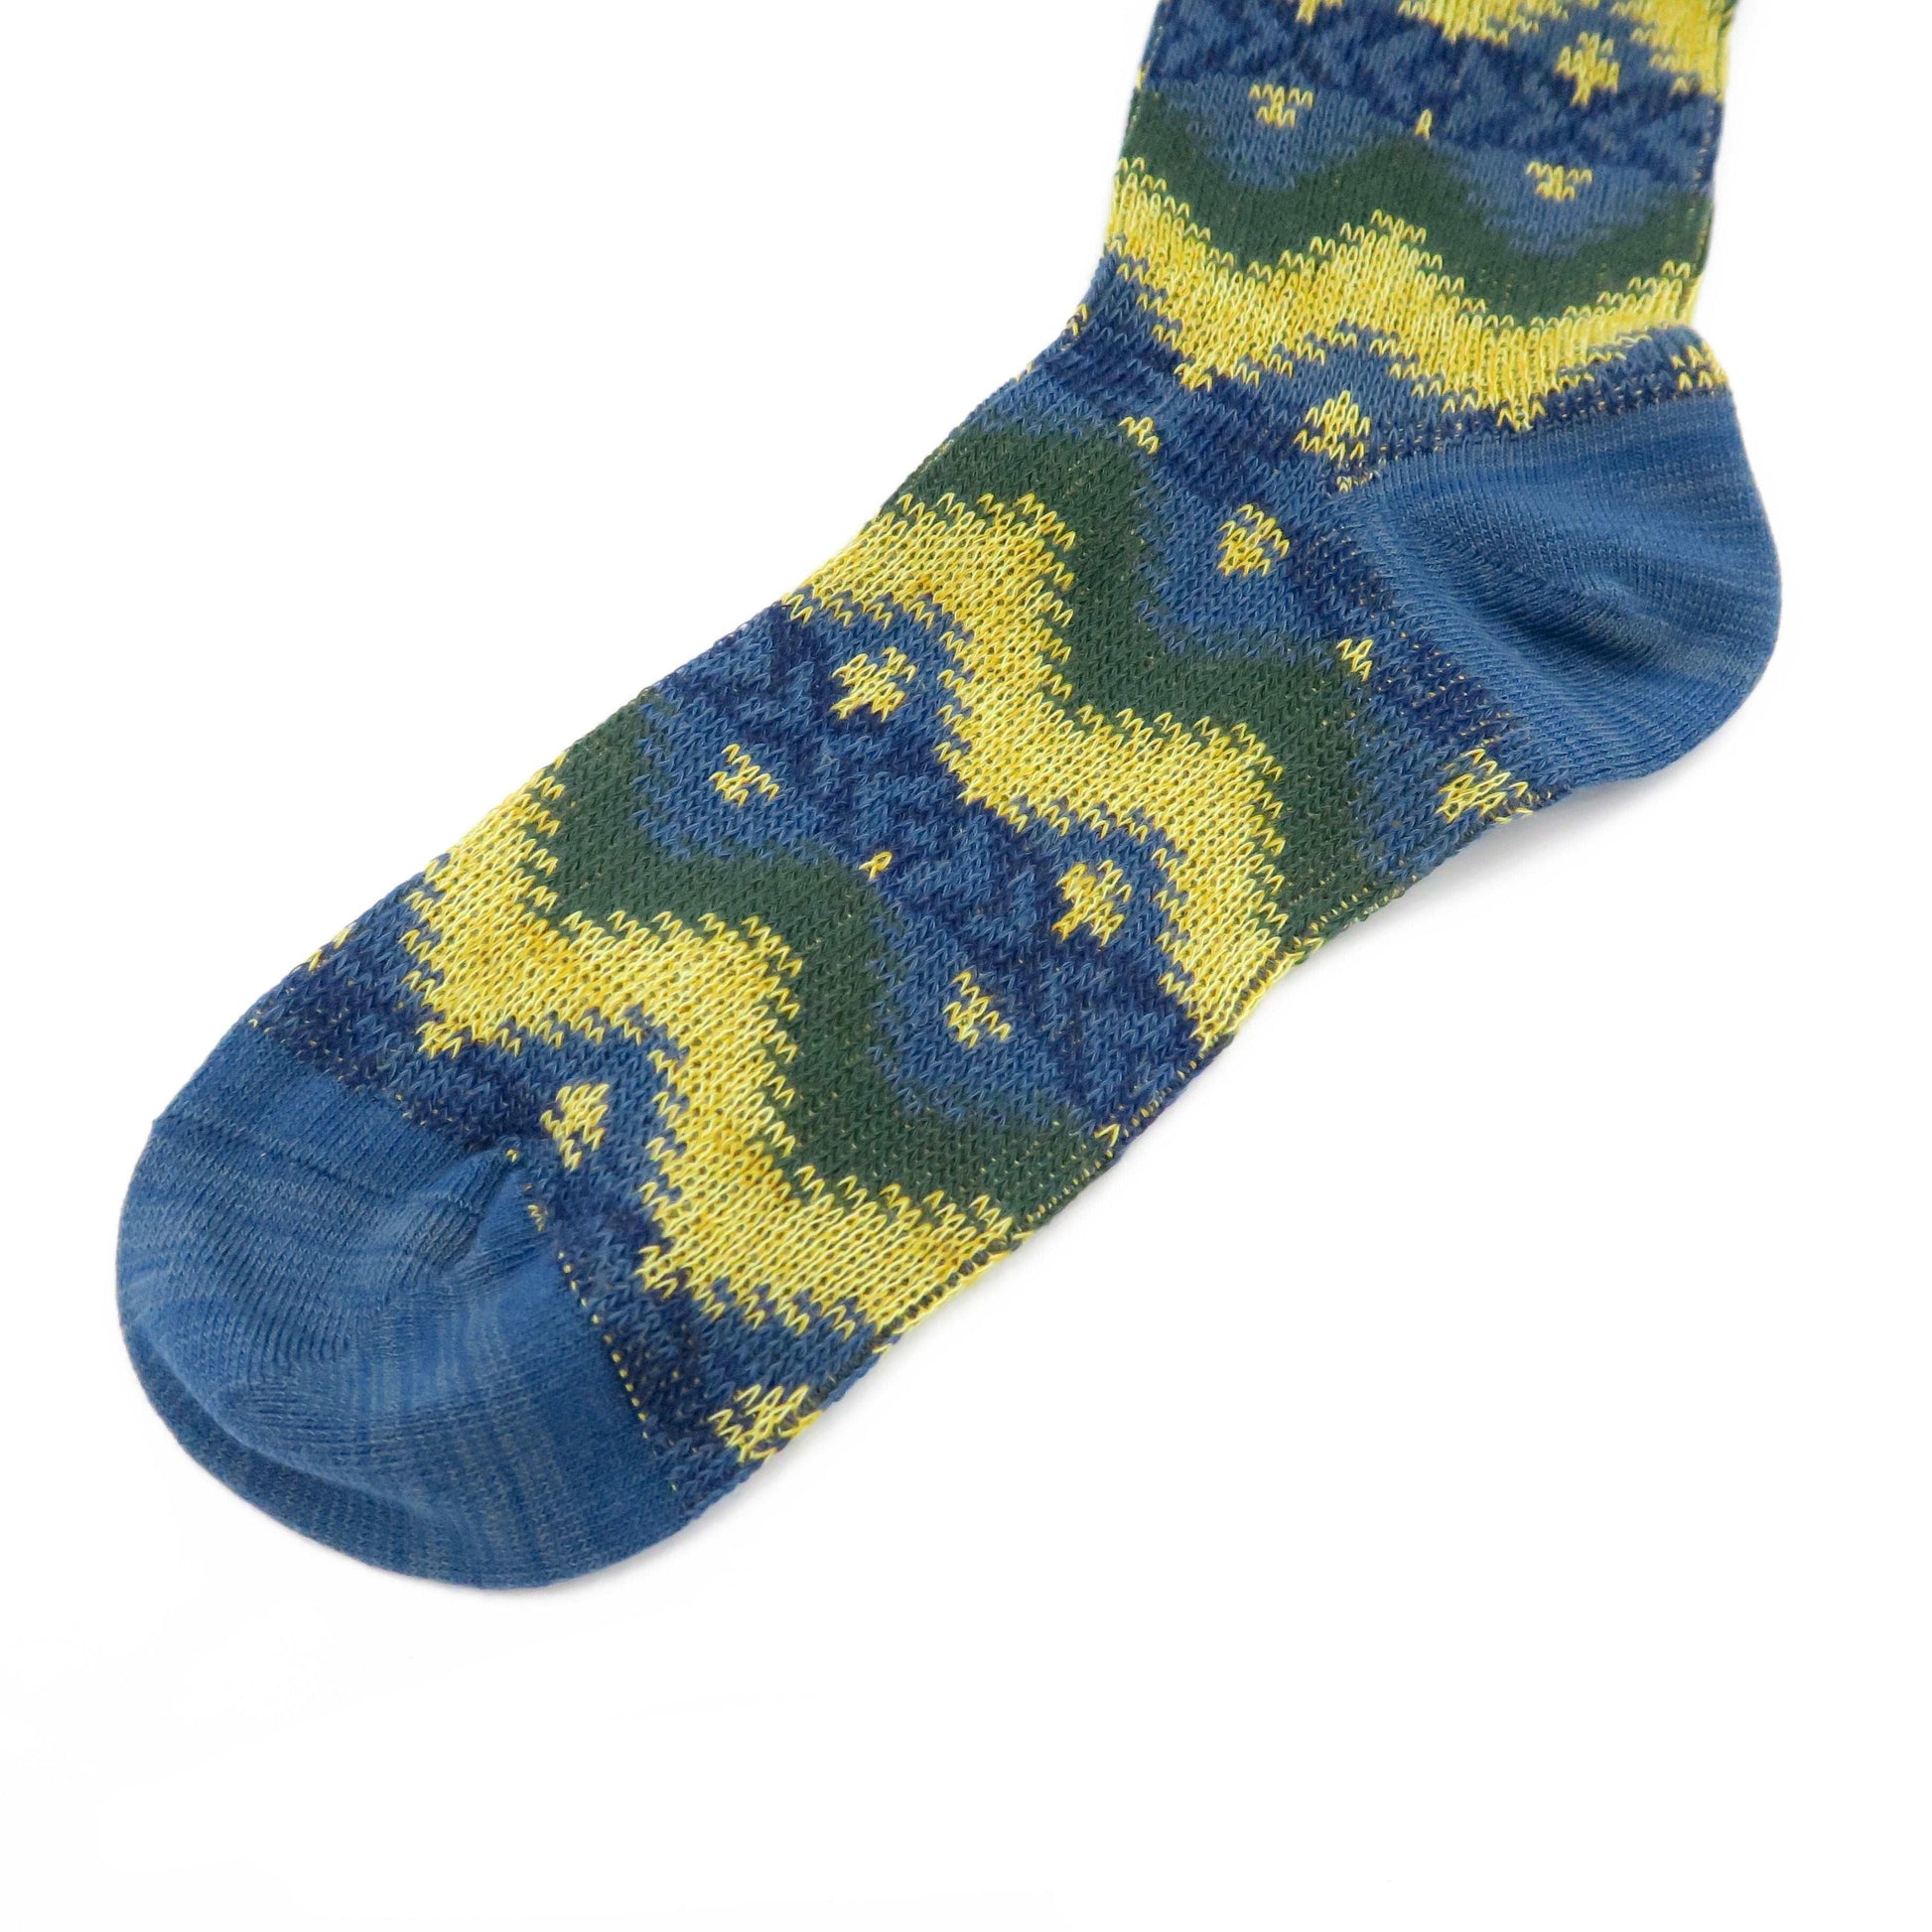 maze pattern yellow and navy socks